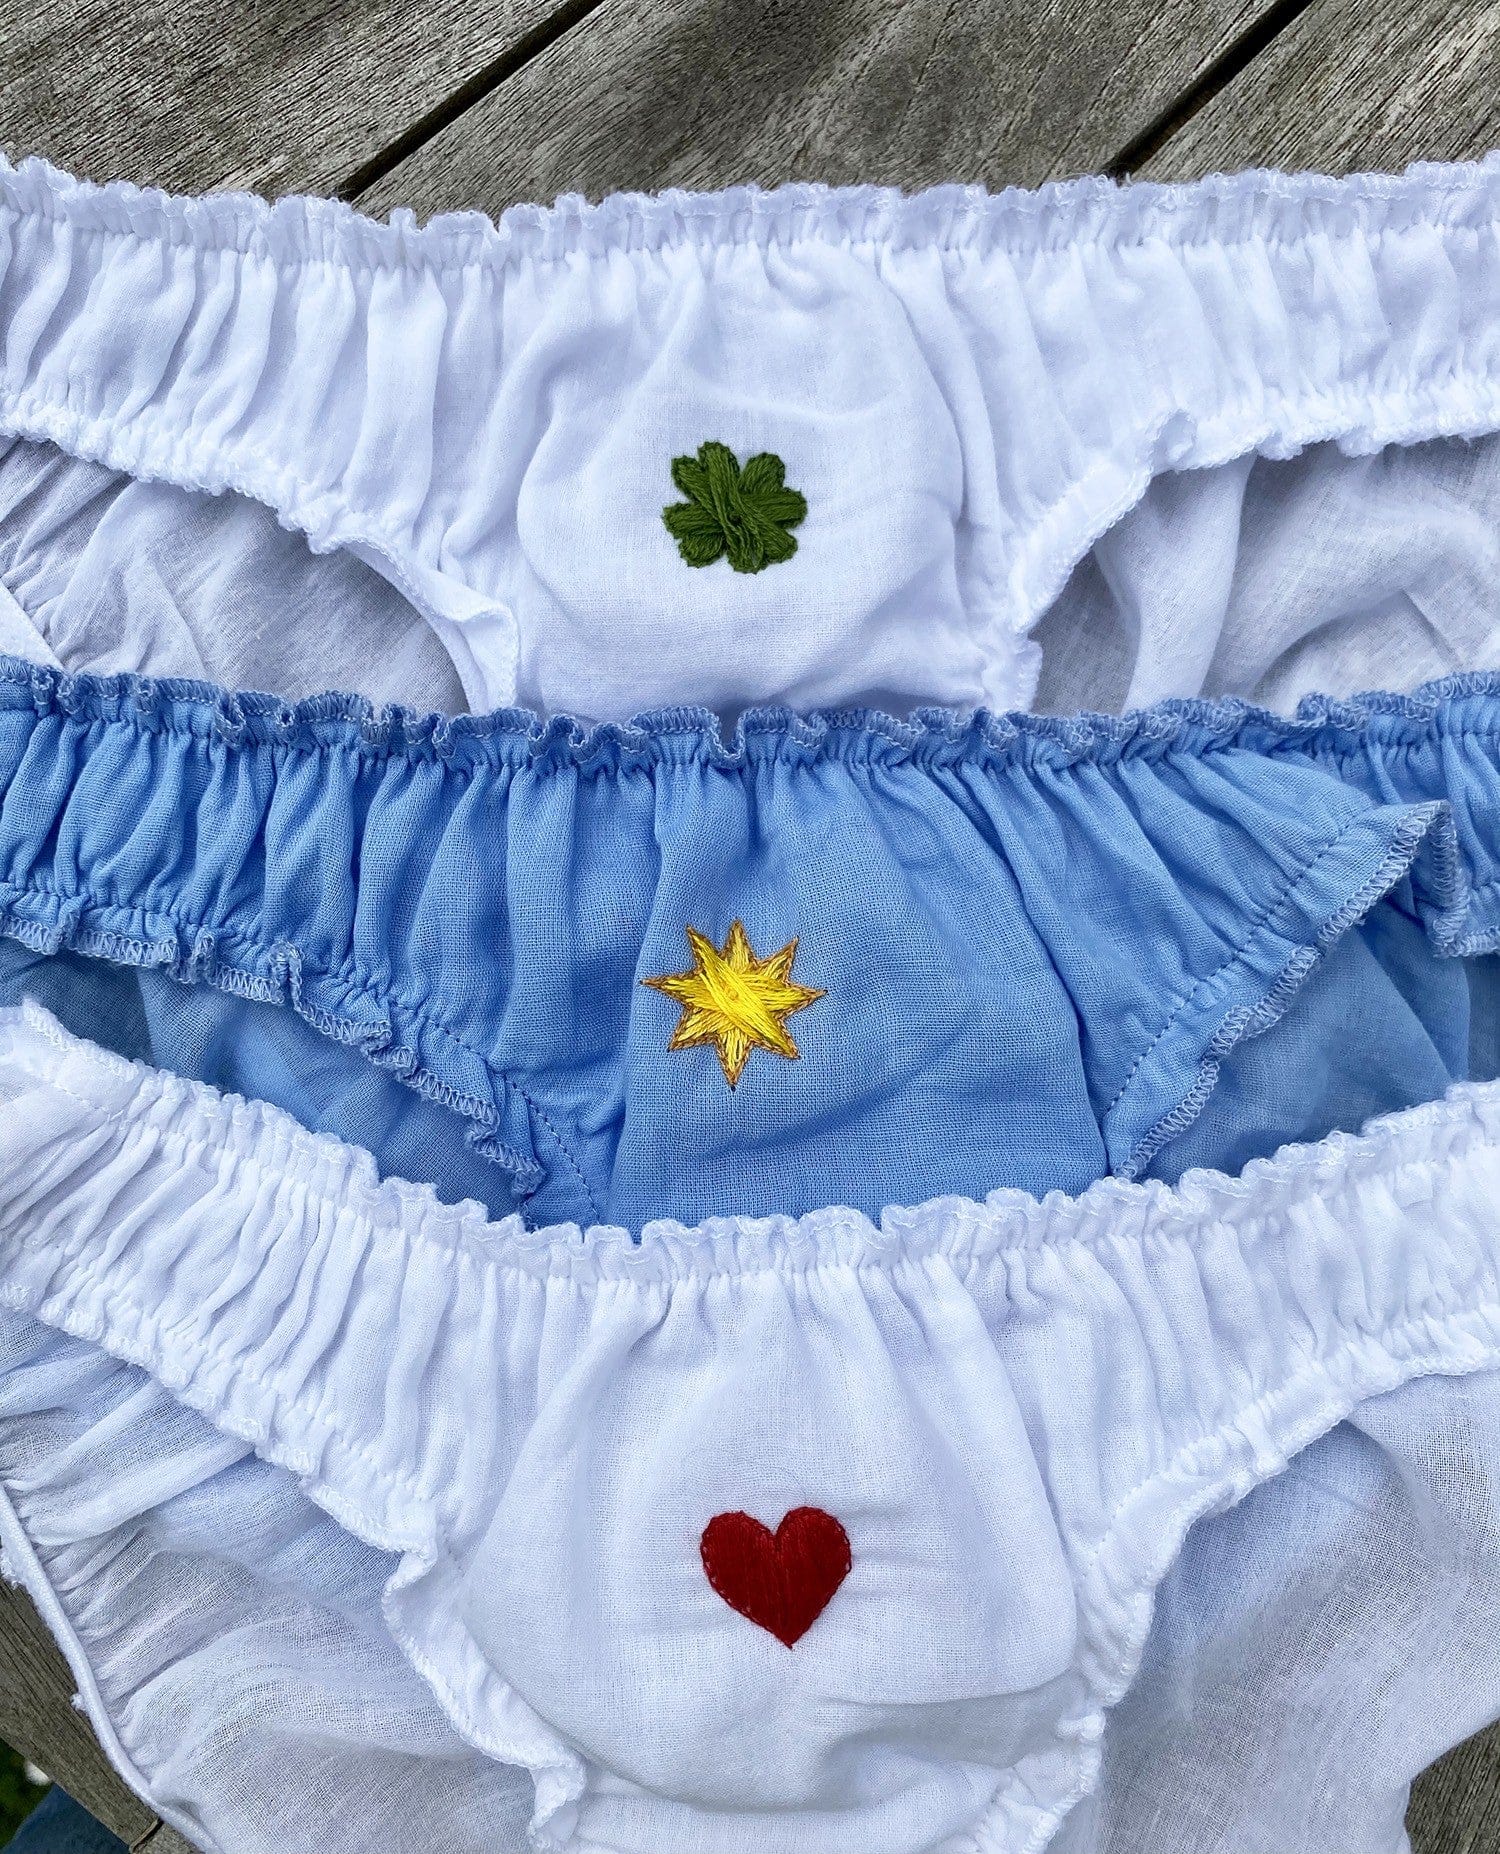 Soleil hand embroidered panties, 100% organic cotton. Germaine des prés –  germainedespres